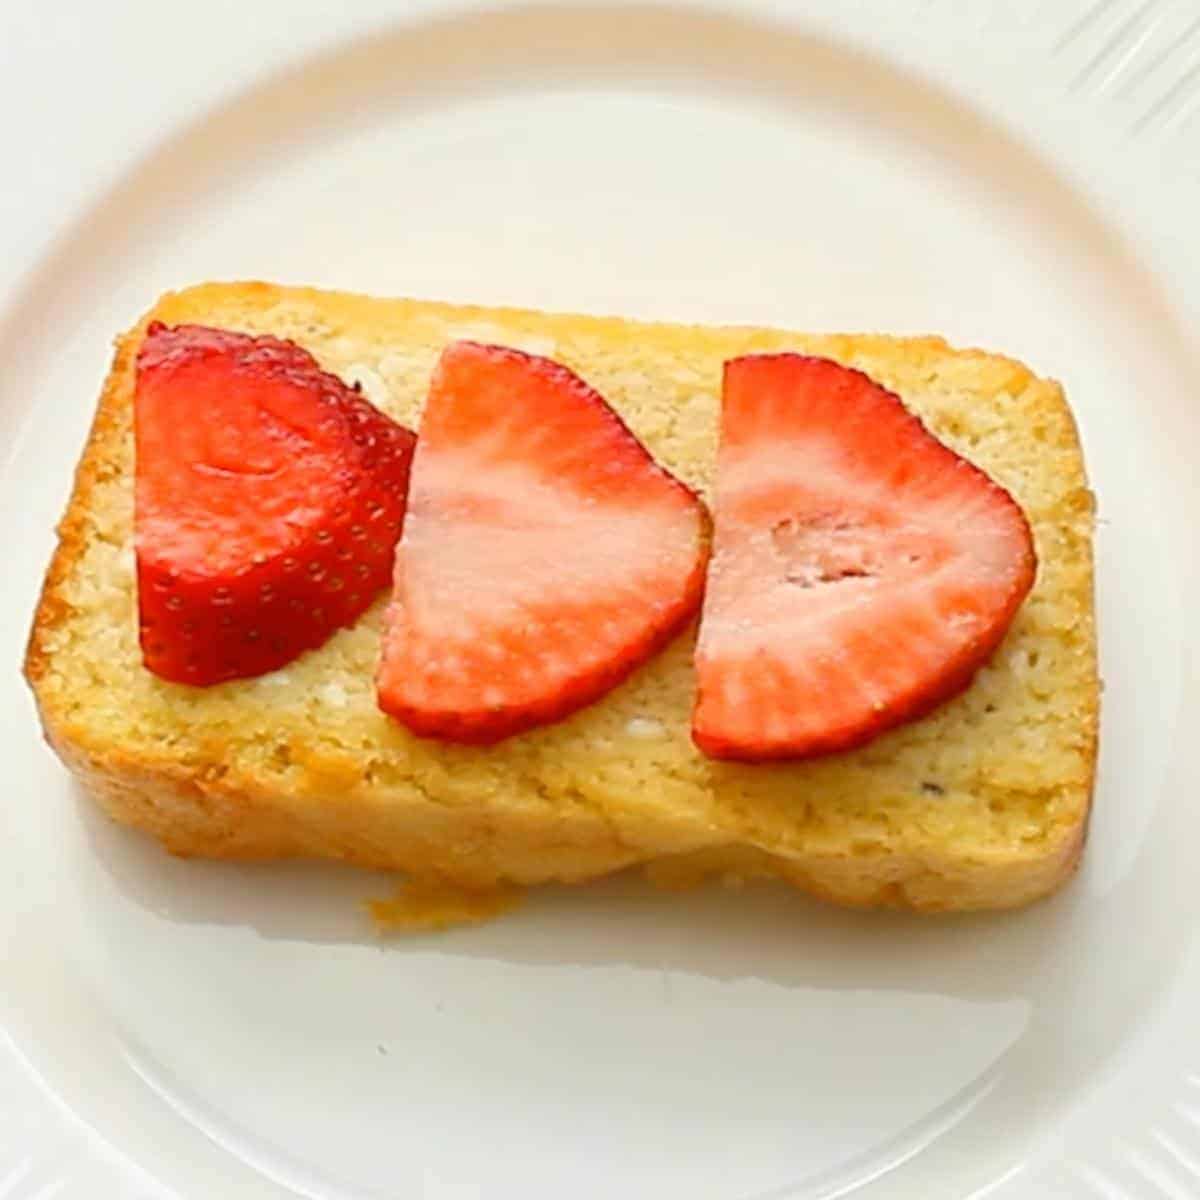 sliced strawberries layered on pound cake slice.